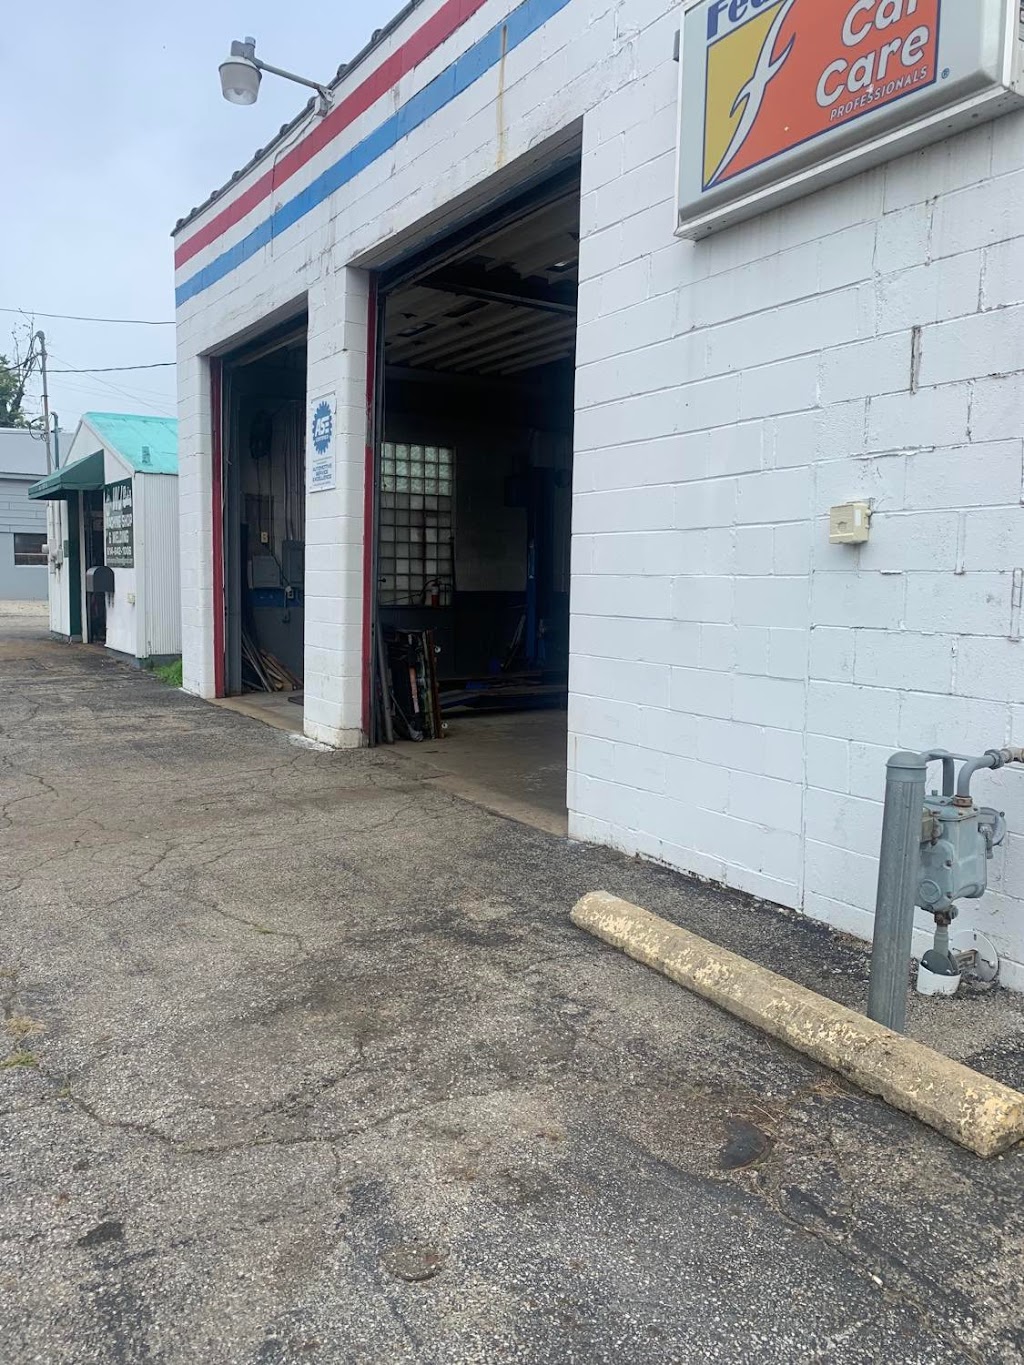 Ricks Auto Repair | 96 E Town St, West Jefferson, OH 43162 | Phone: (614) 642-1010